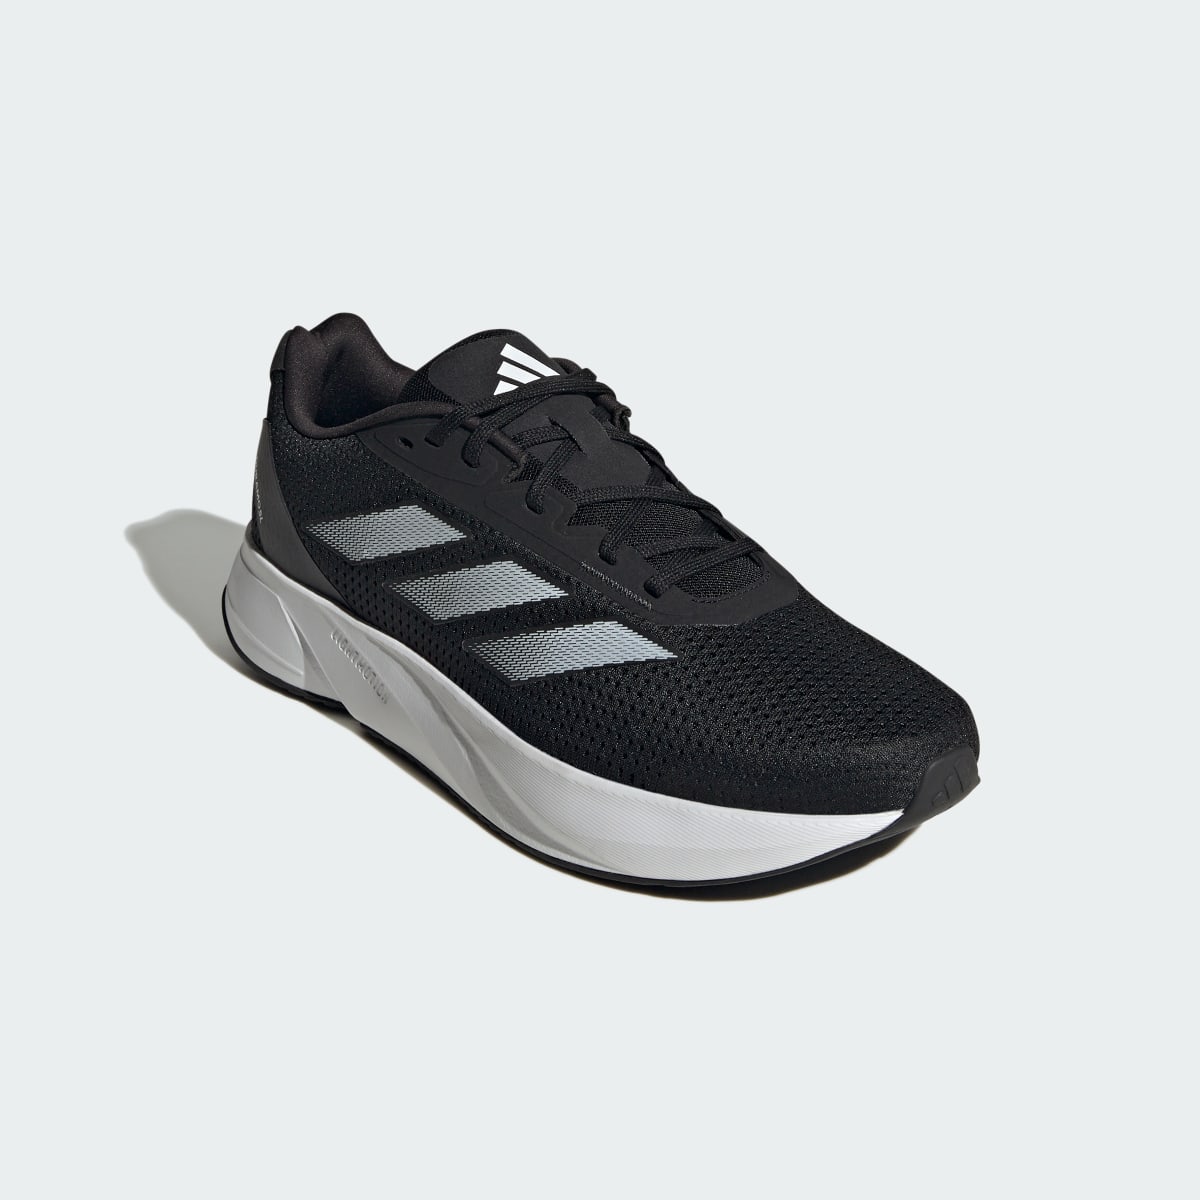 Adidas Duramo SL Wide Running Shoes. 5